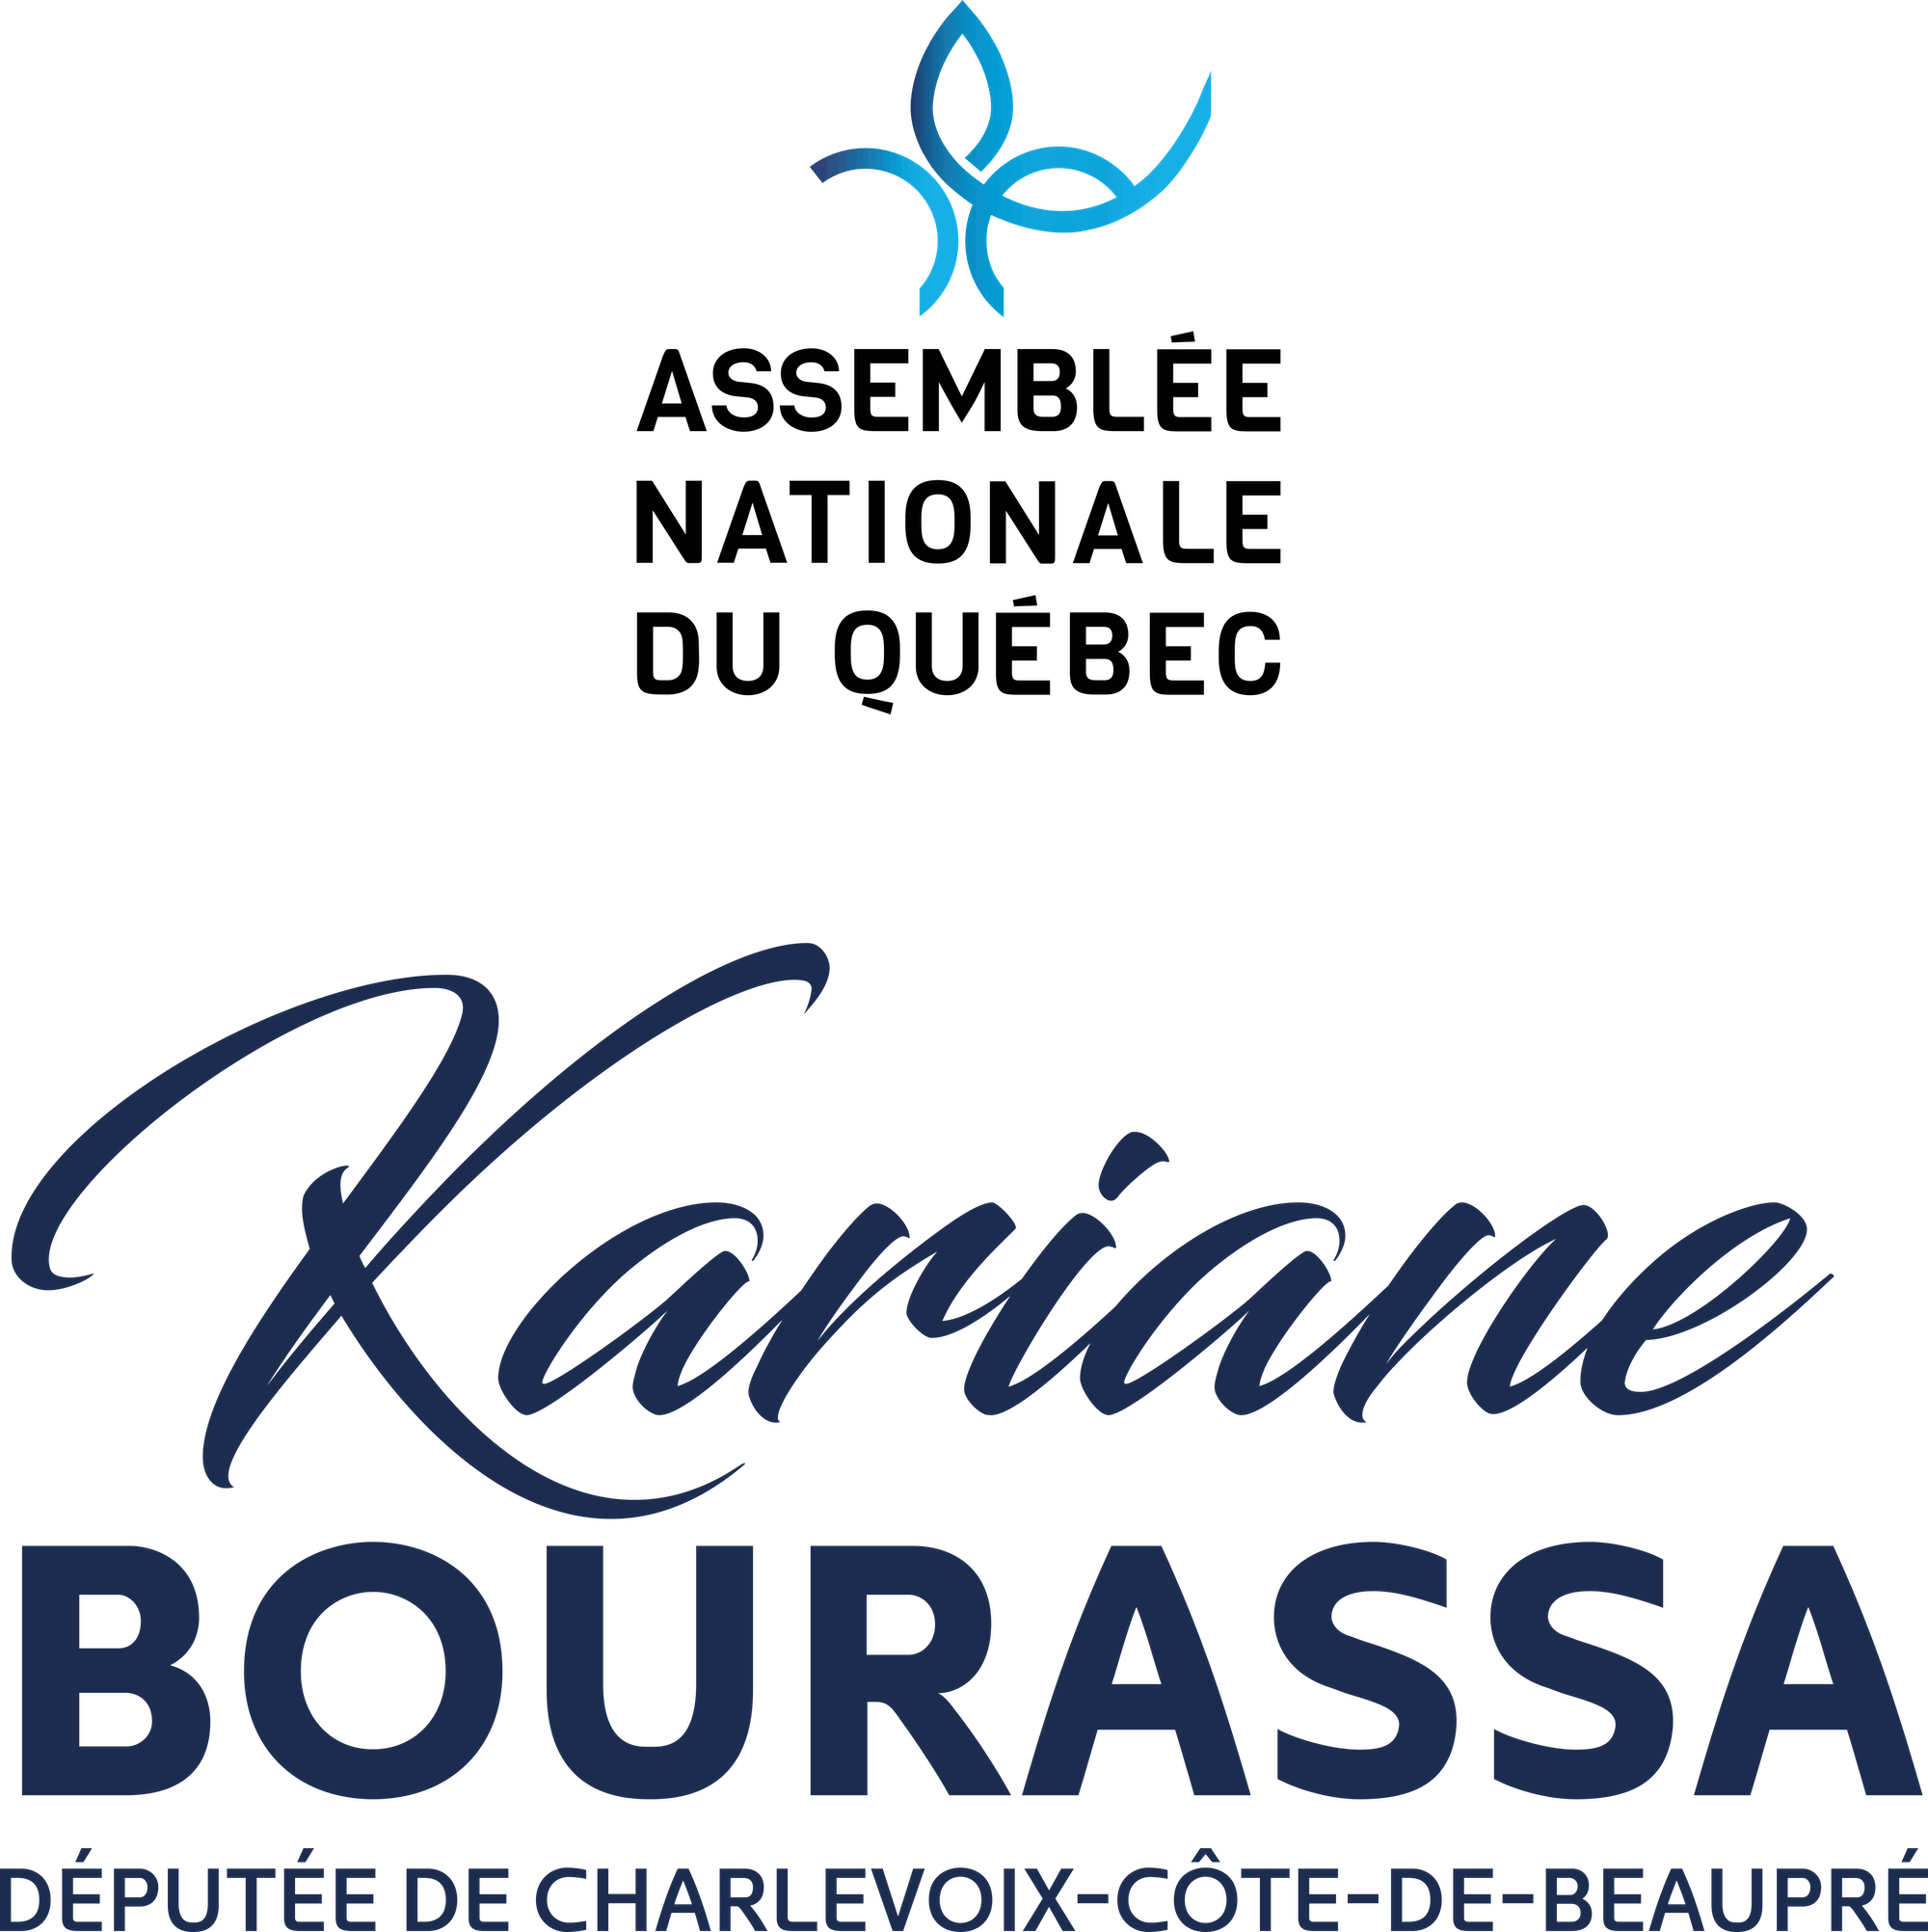 Kariane Bourassa